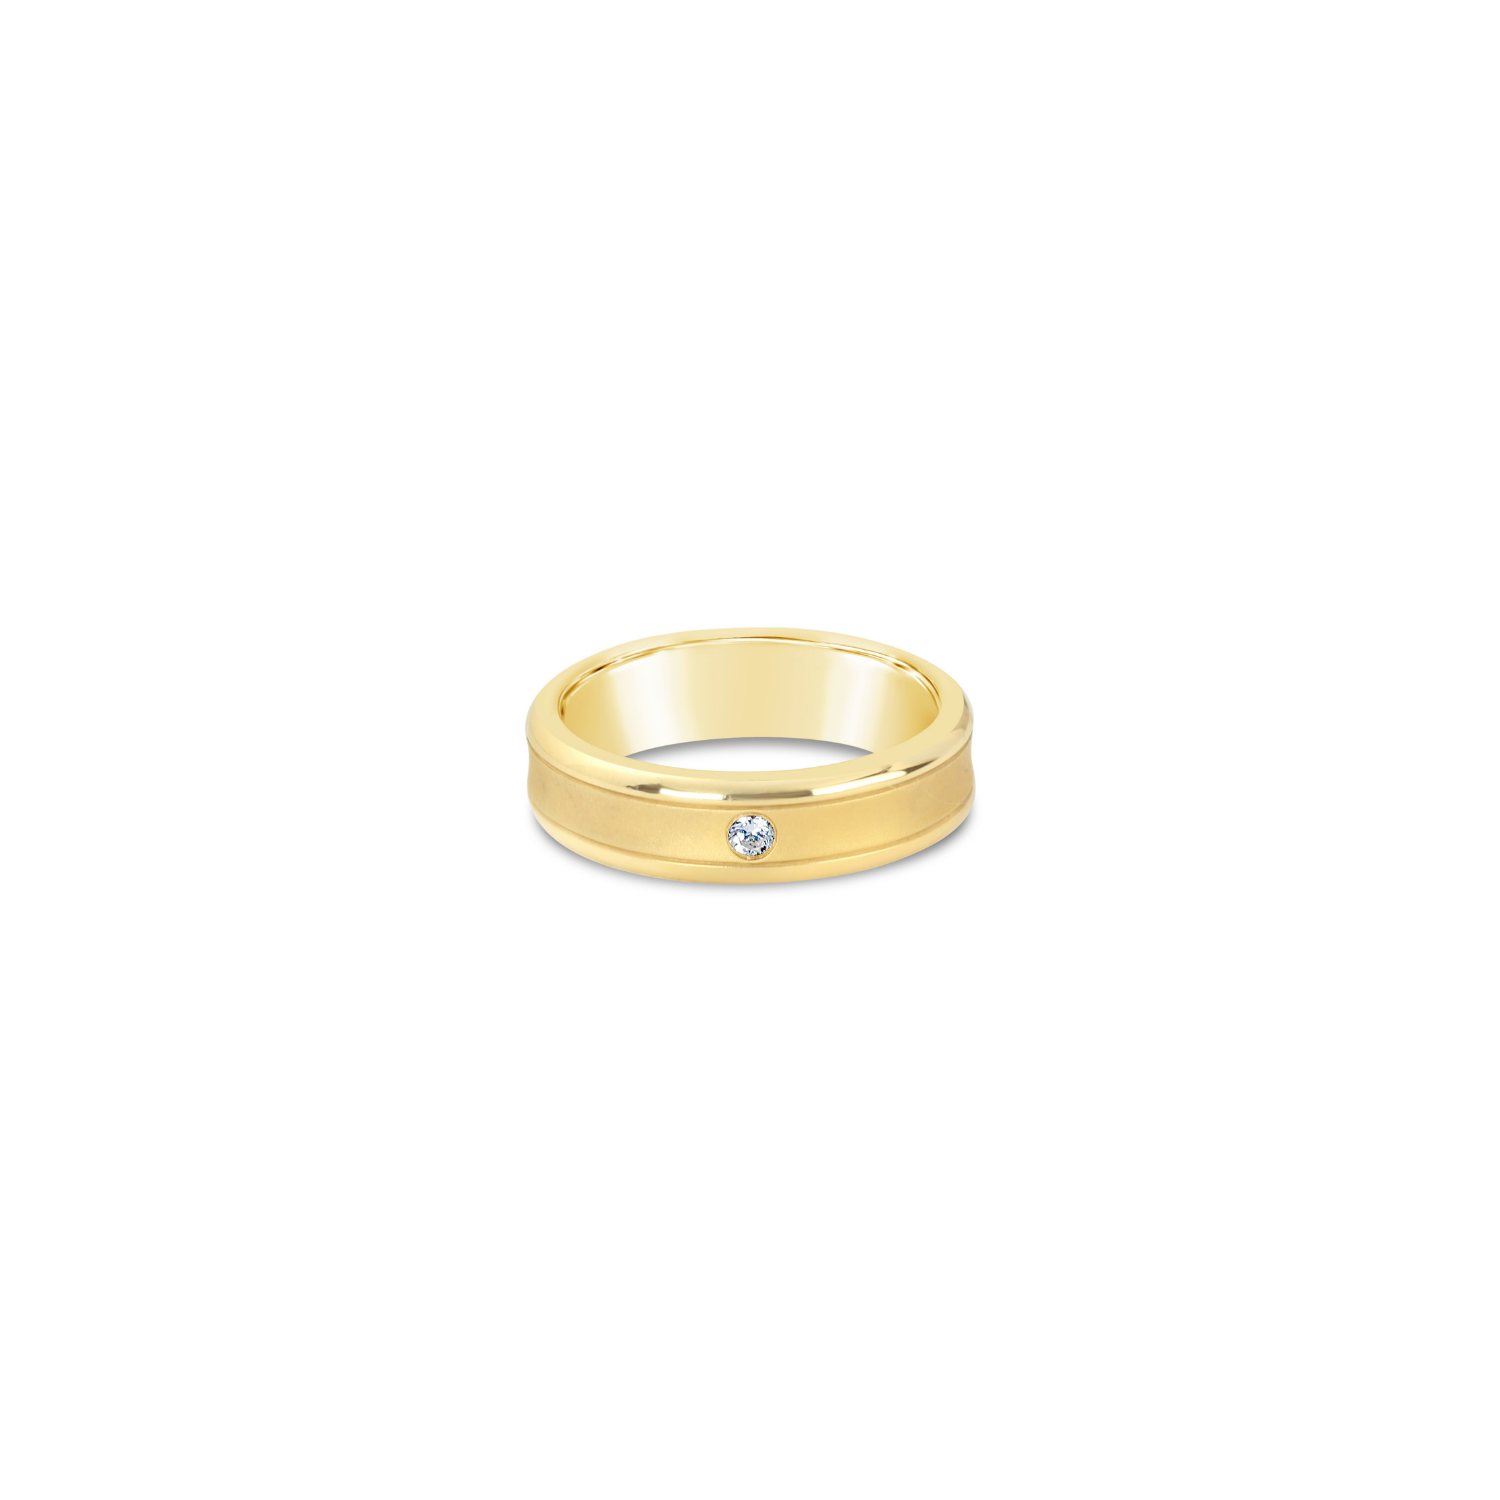 Yellow gold wedding ring with diamond